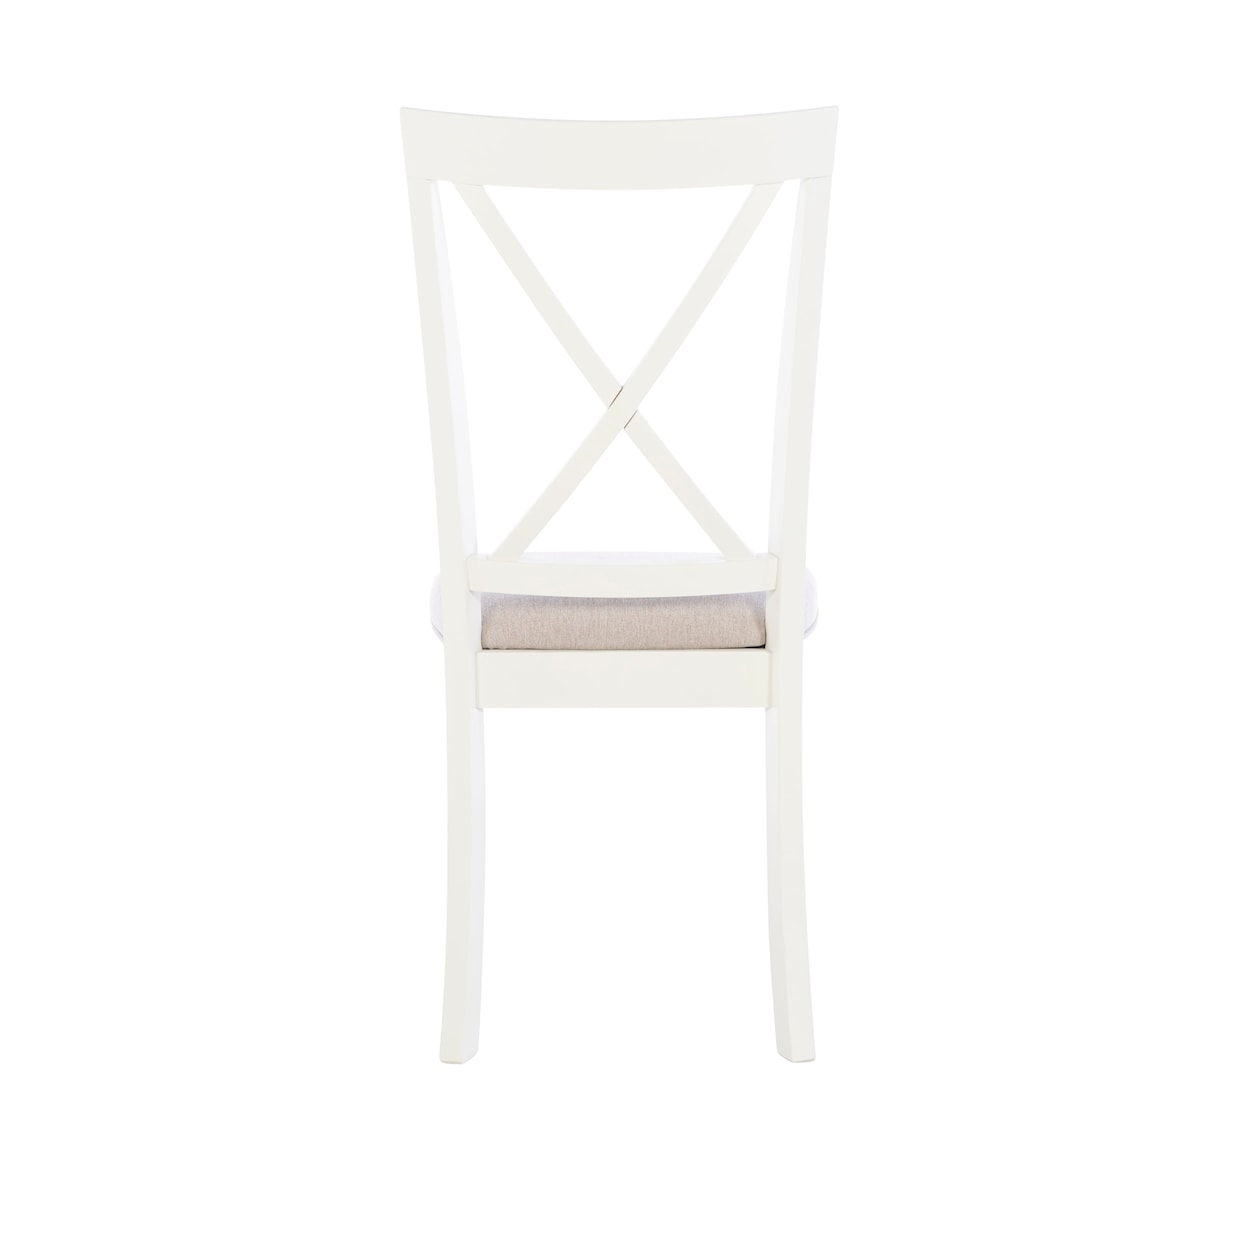 Powell Jane 2-Piece Side Chair Set